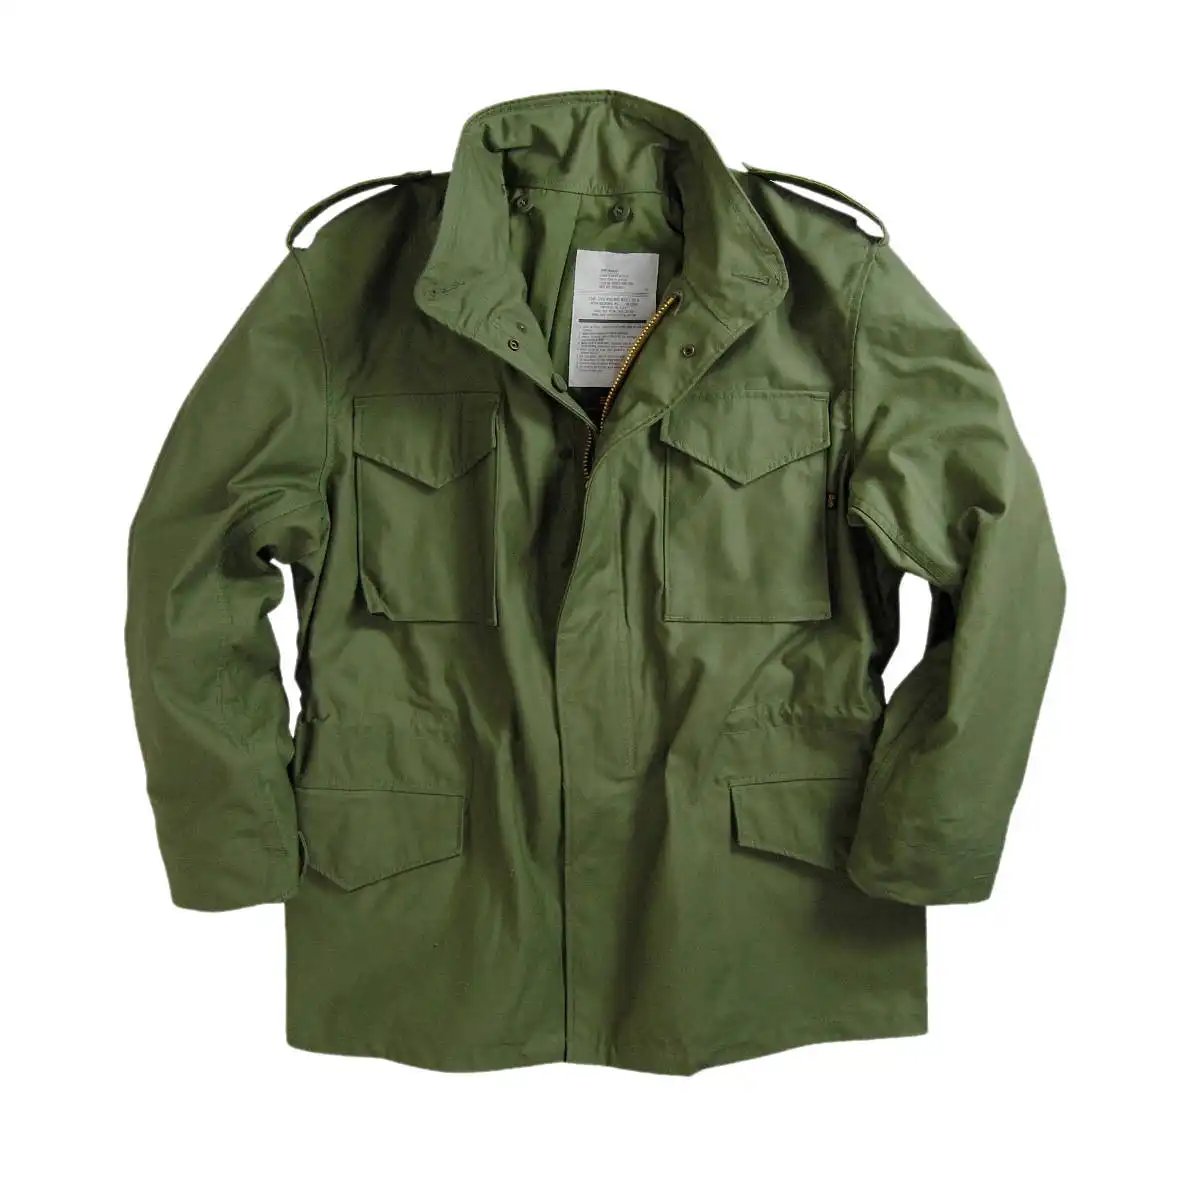 NoName vest Green M discount 64% MEN FASHION Jackets Basic 